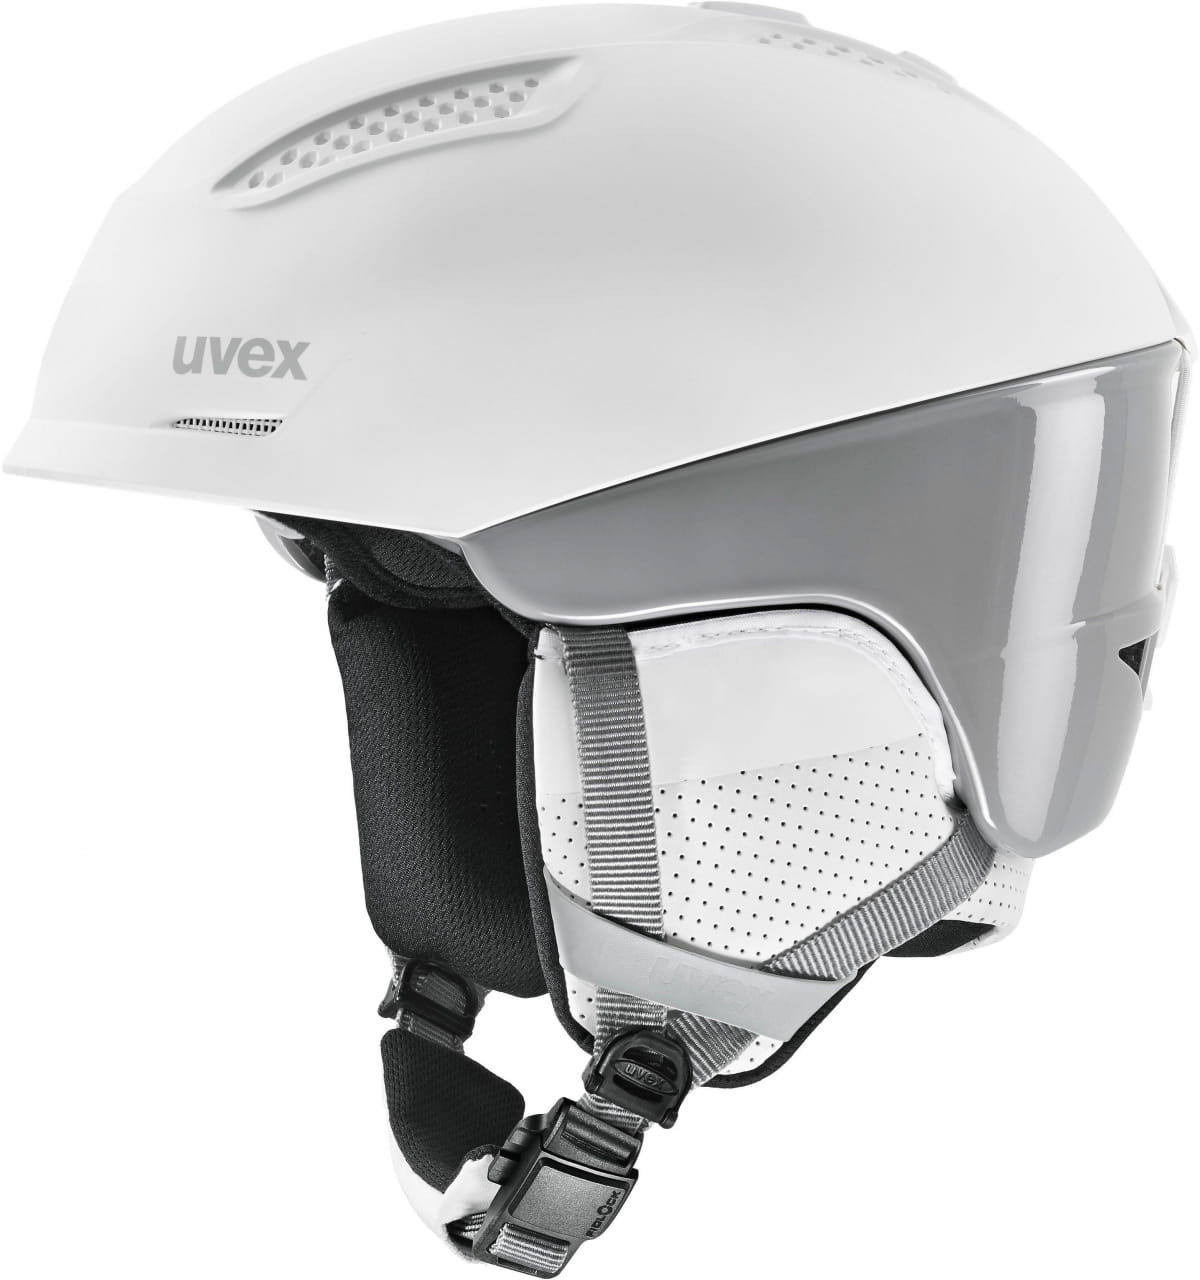 Casco de esquí unisex Uvex Ultra Pro